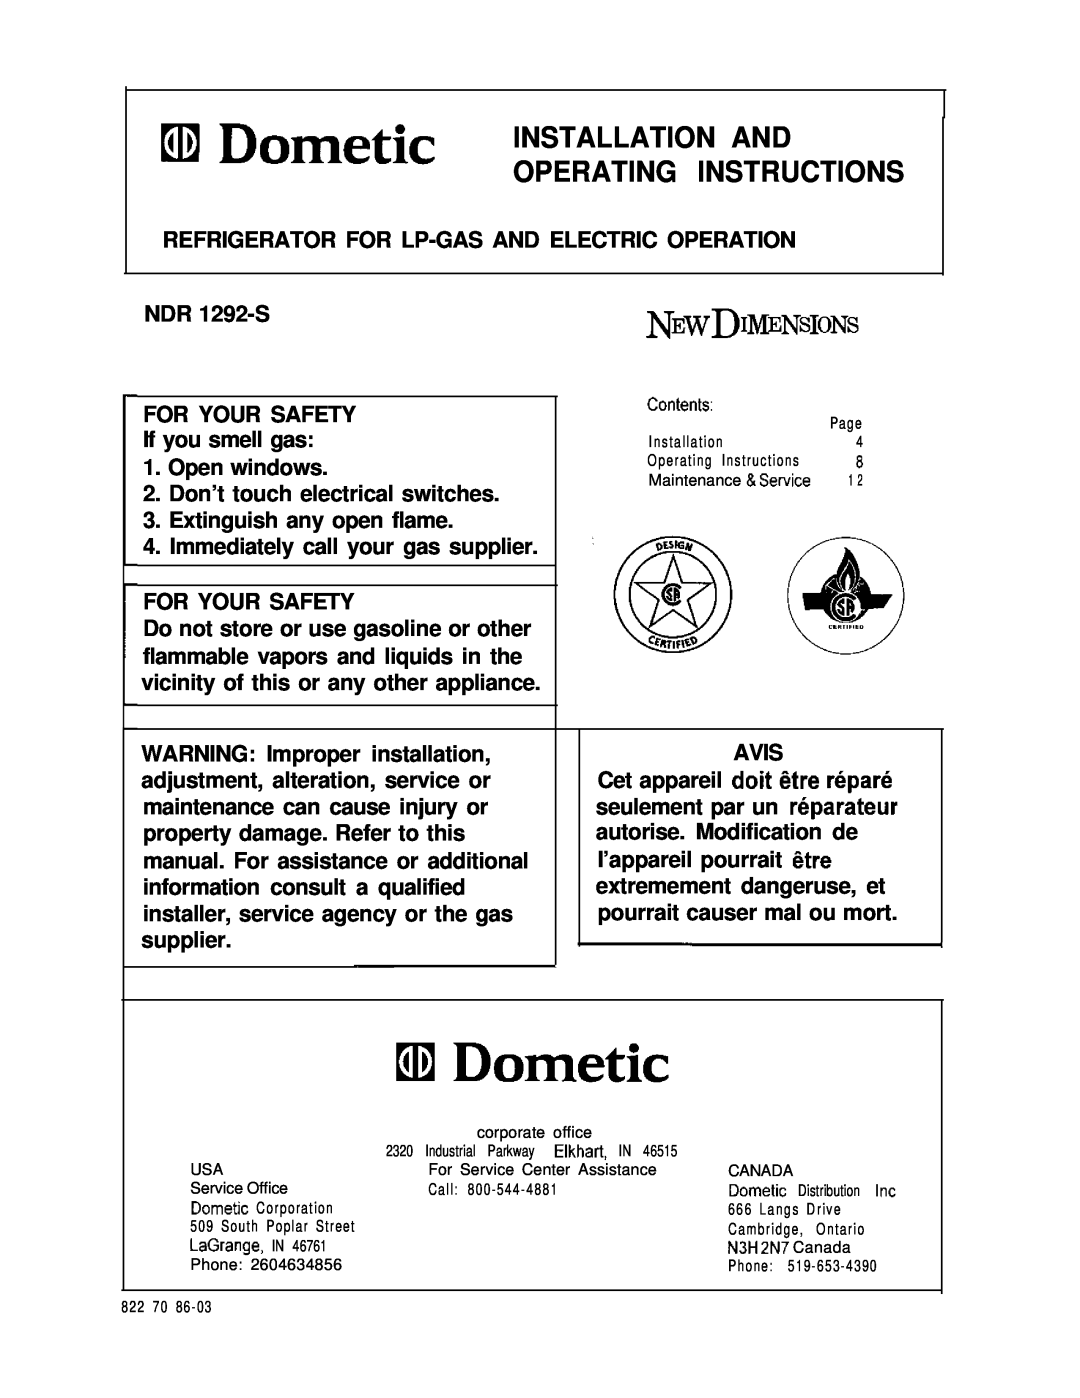 Dometic NDR1292-S dimensions II Dometic, Newdimensions 